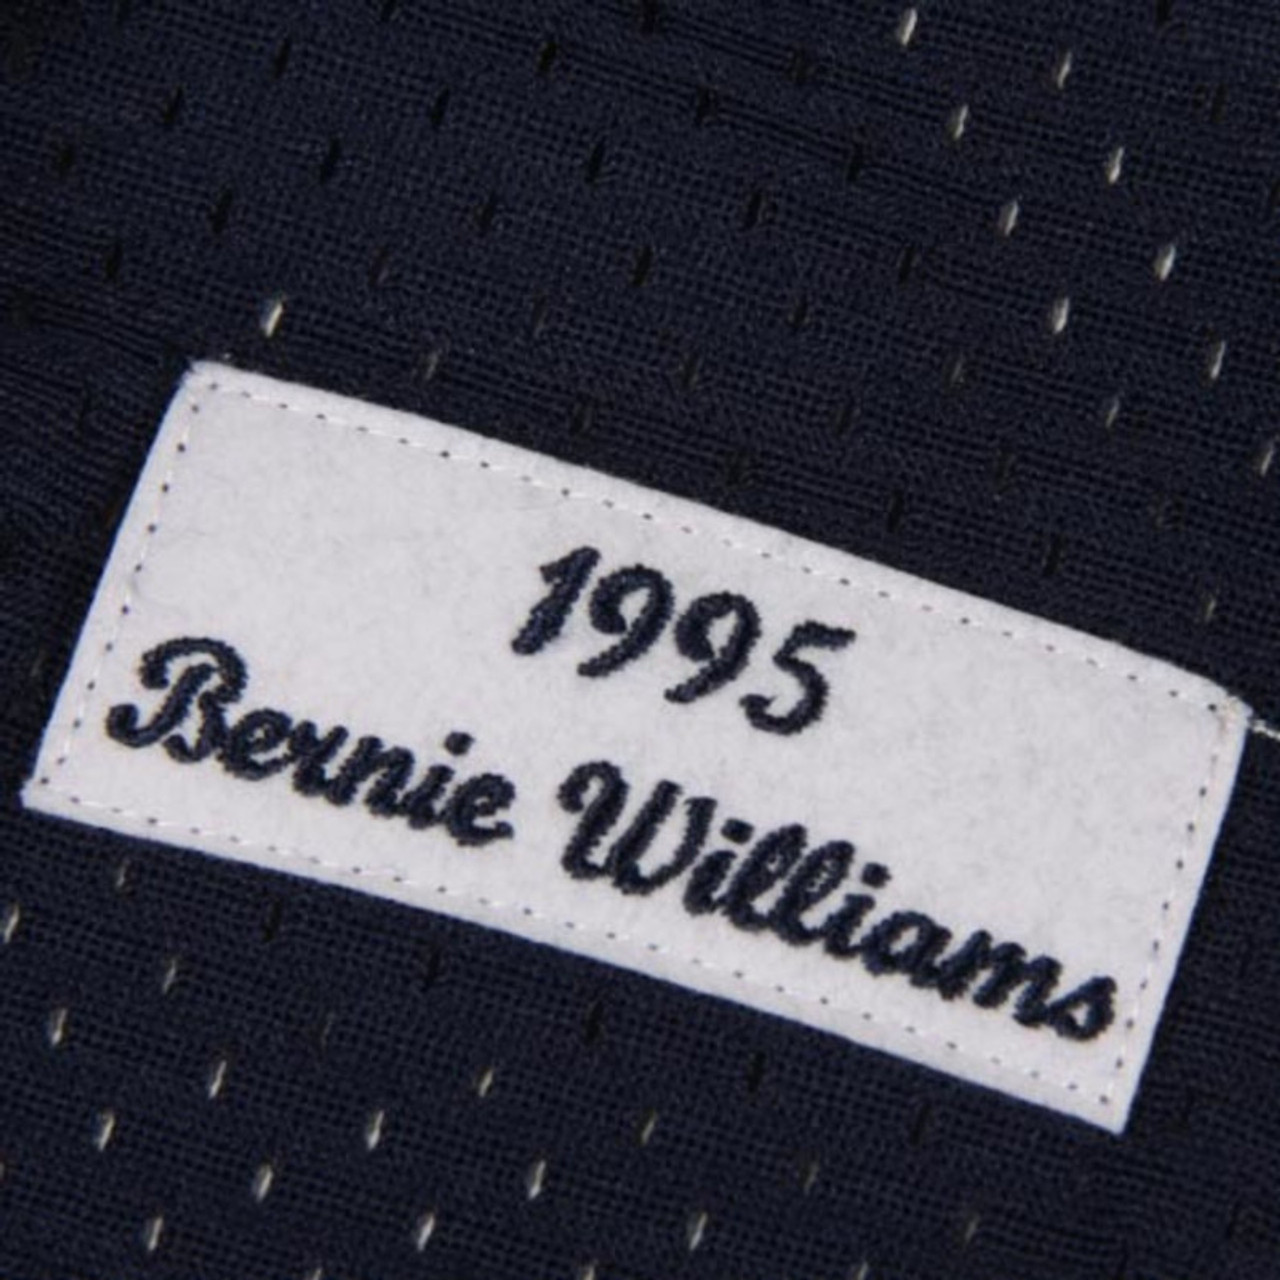 Bernie Williams New York Yankees Autographed Mitchell & Ness